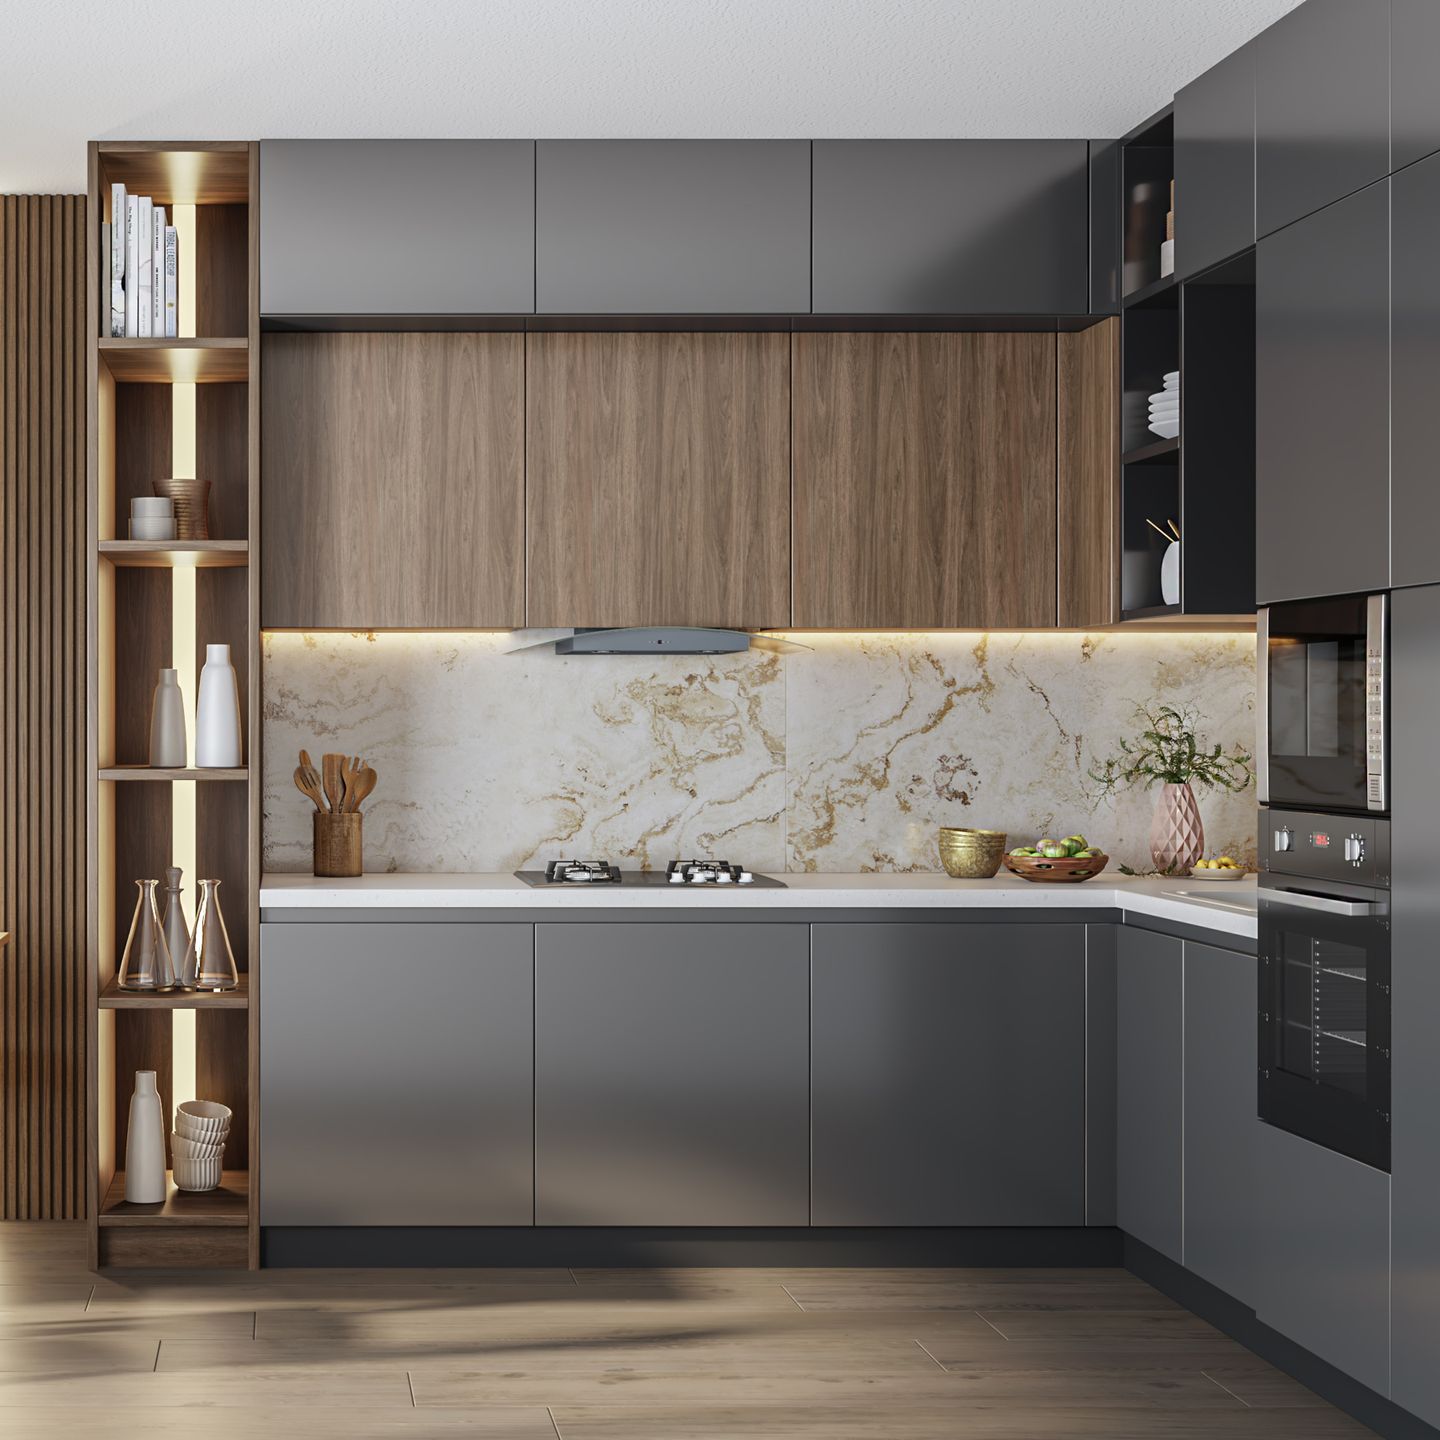 Modern Compact Kitchen Design Idea with Open Corner Unit - Livspace